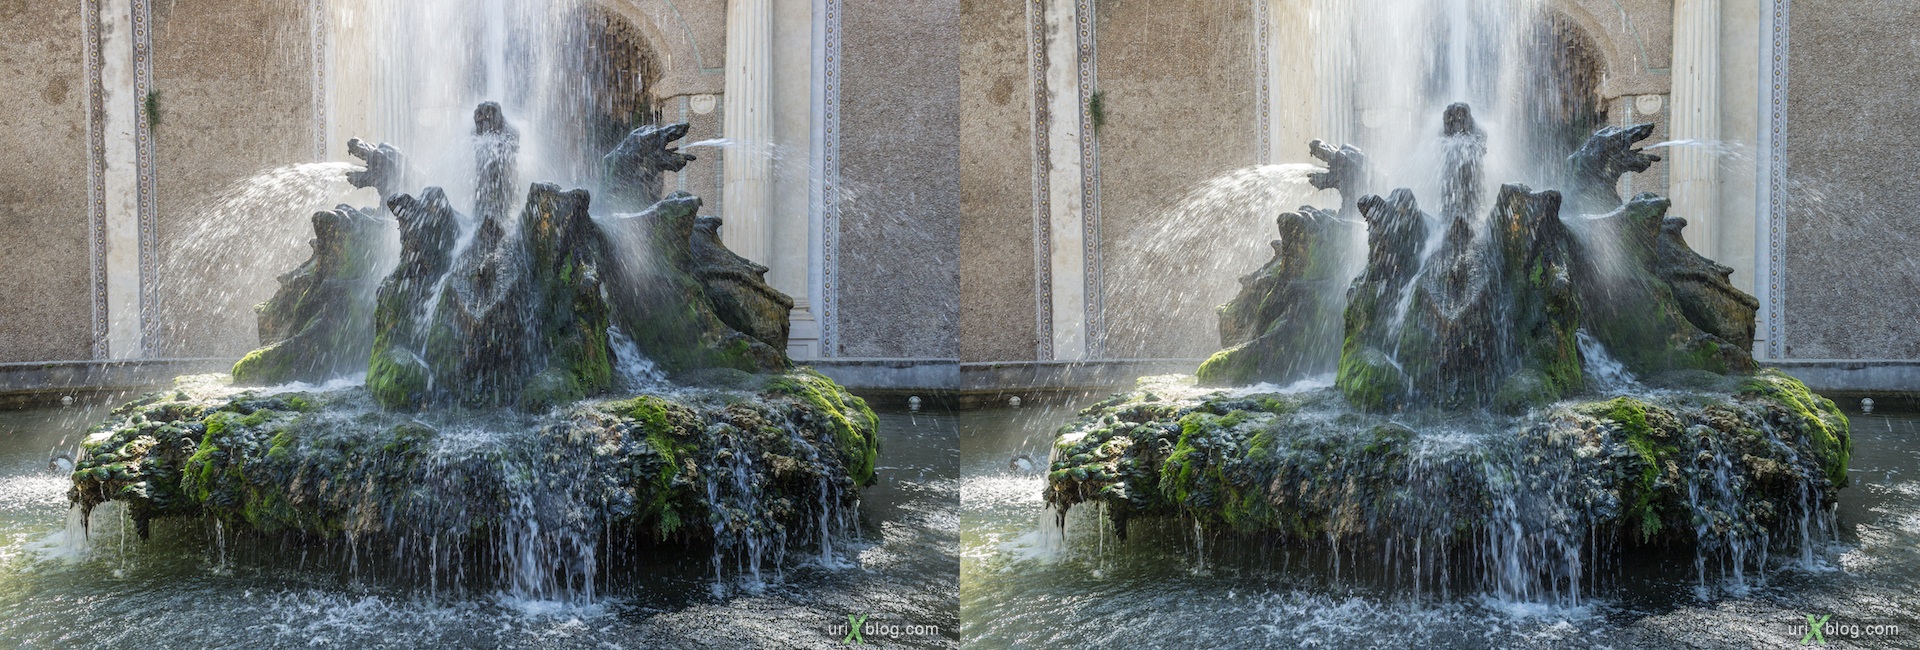 2012, Fontana dei Draghi, villa D'Este, Italy, Tivoli, Rome, 3D, stereo pair, cross-eyed, crossview, cross view stereo pair